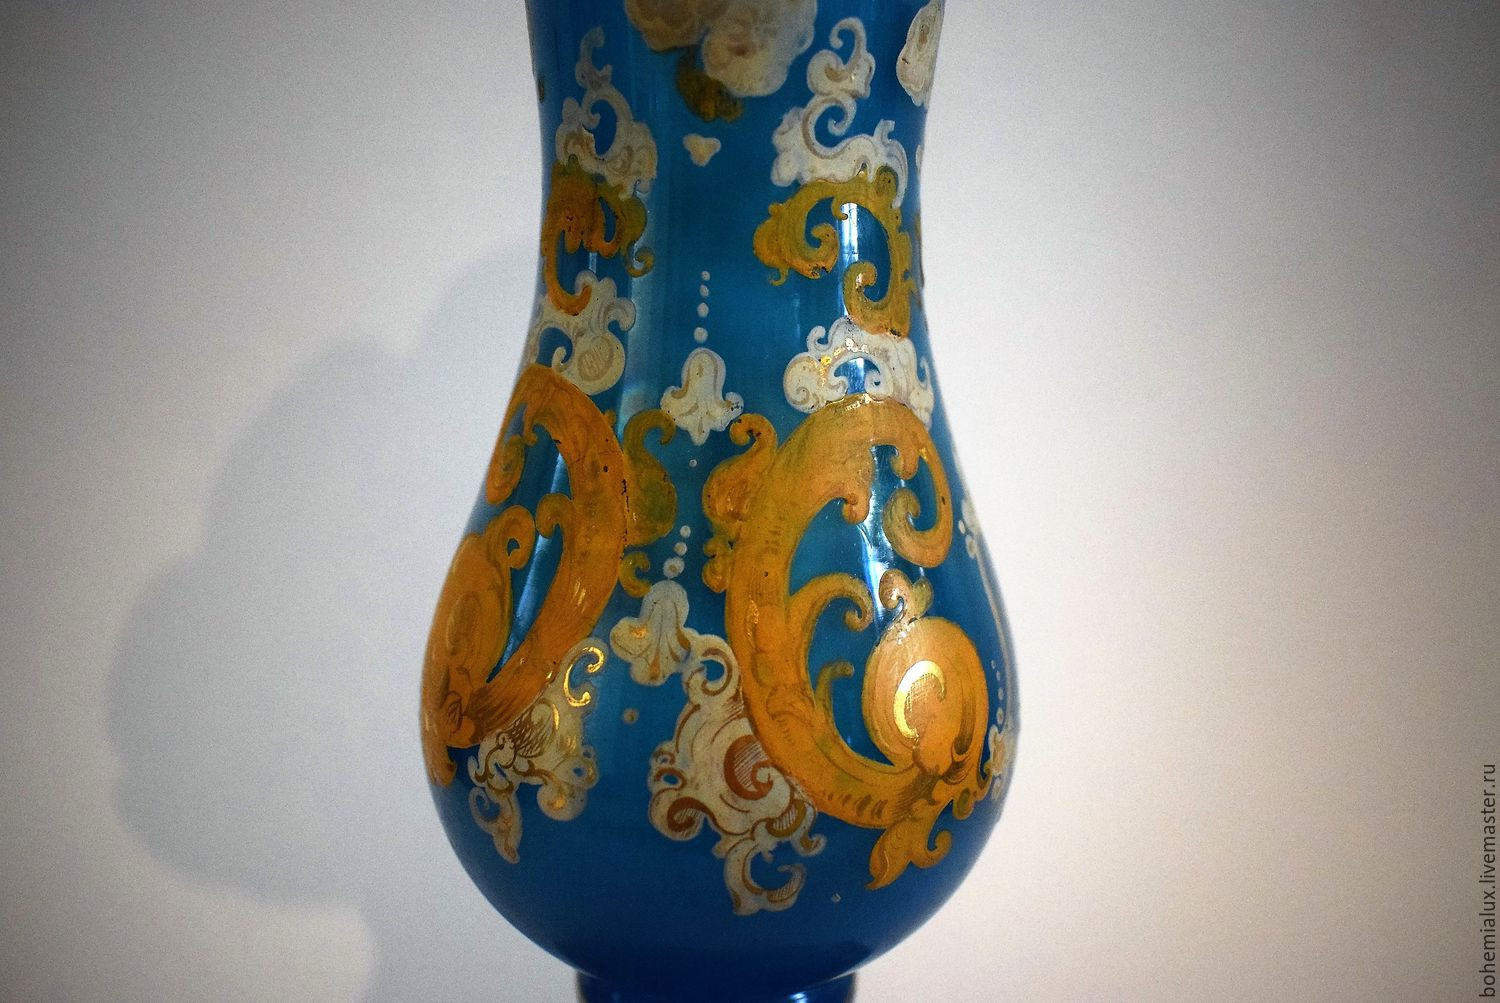 10 Lovely Bohemian Glass Vase 2024 free download bohemian glass vase of antique opal glass vase 33 cm over 200 years bohemia shop online regarding vintage interior decor antique opal glass vase 33 cm over 200 years bohemia bohemialux